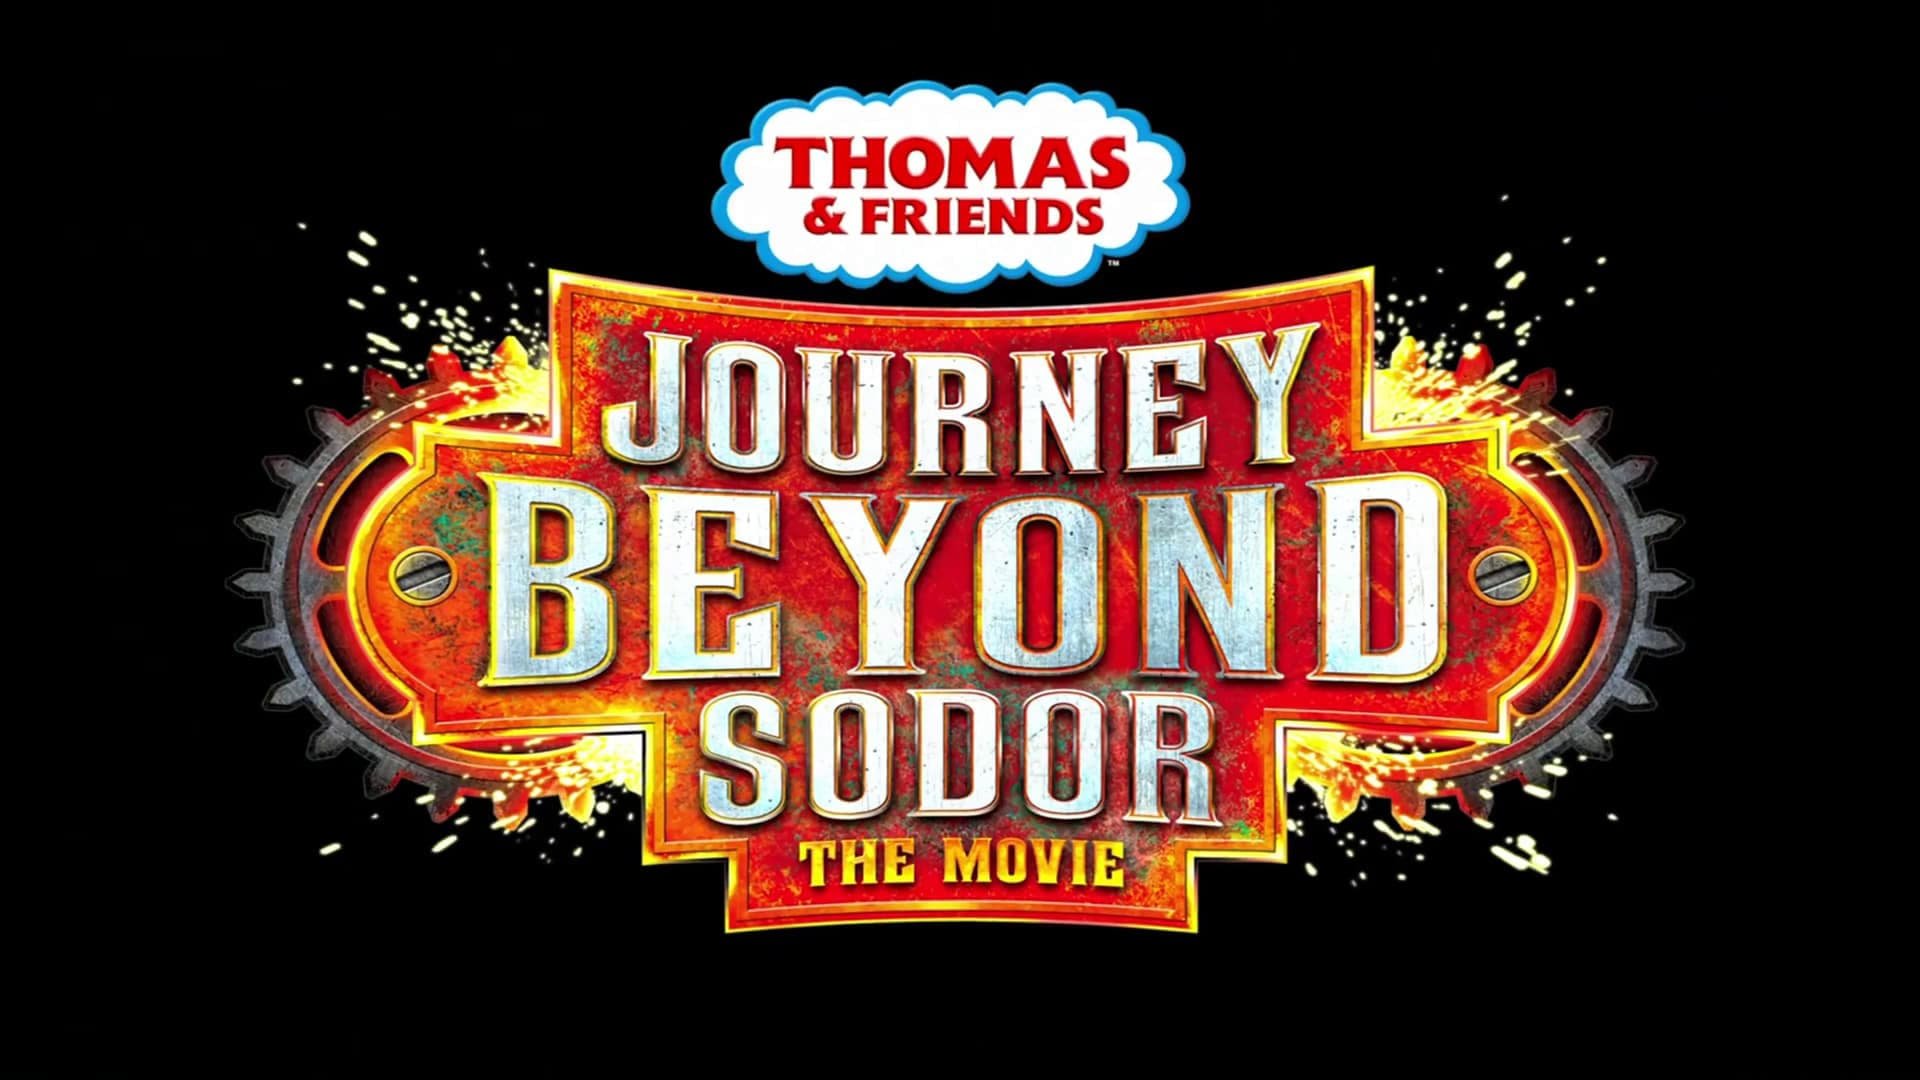 Thomas & Friends: Journey Beyond Sodor - The Movie (2017)